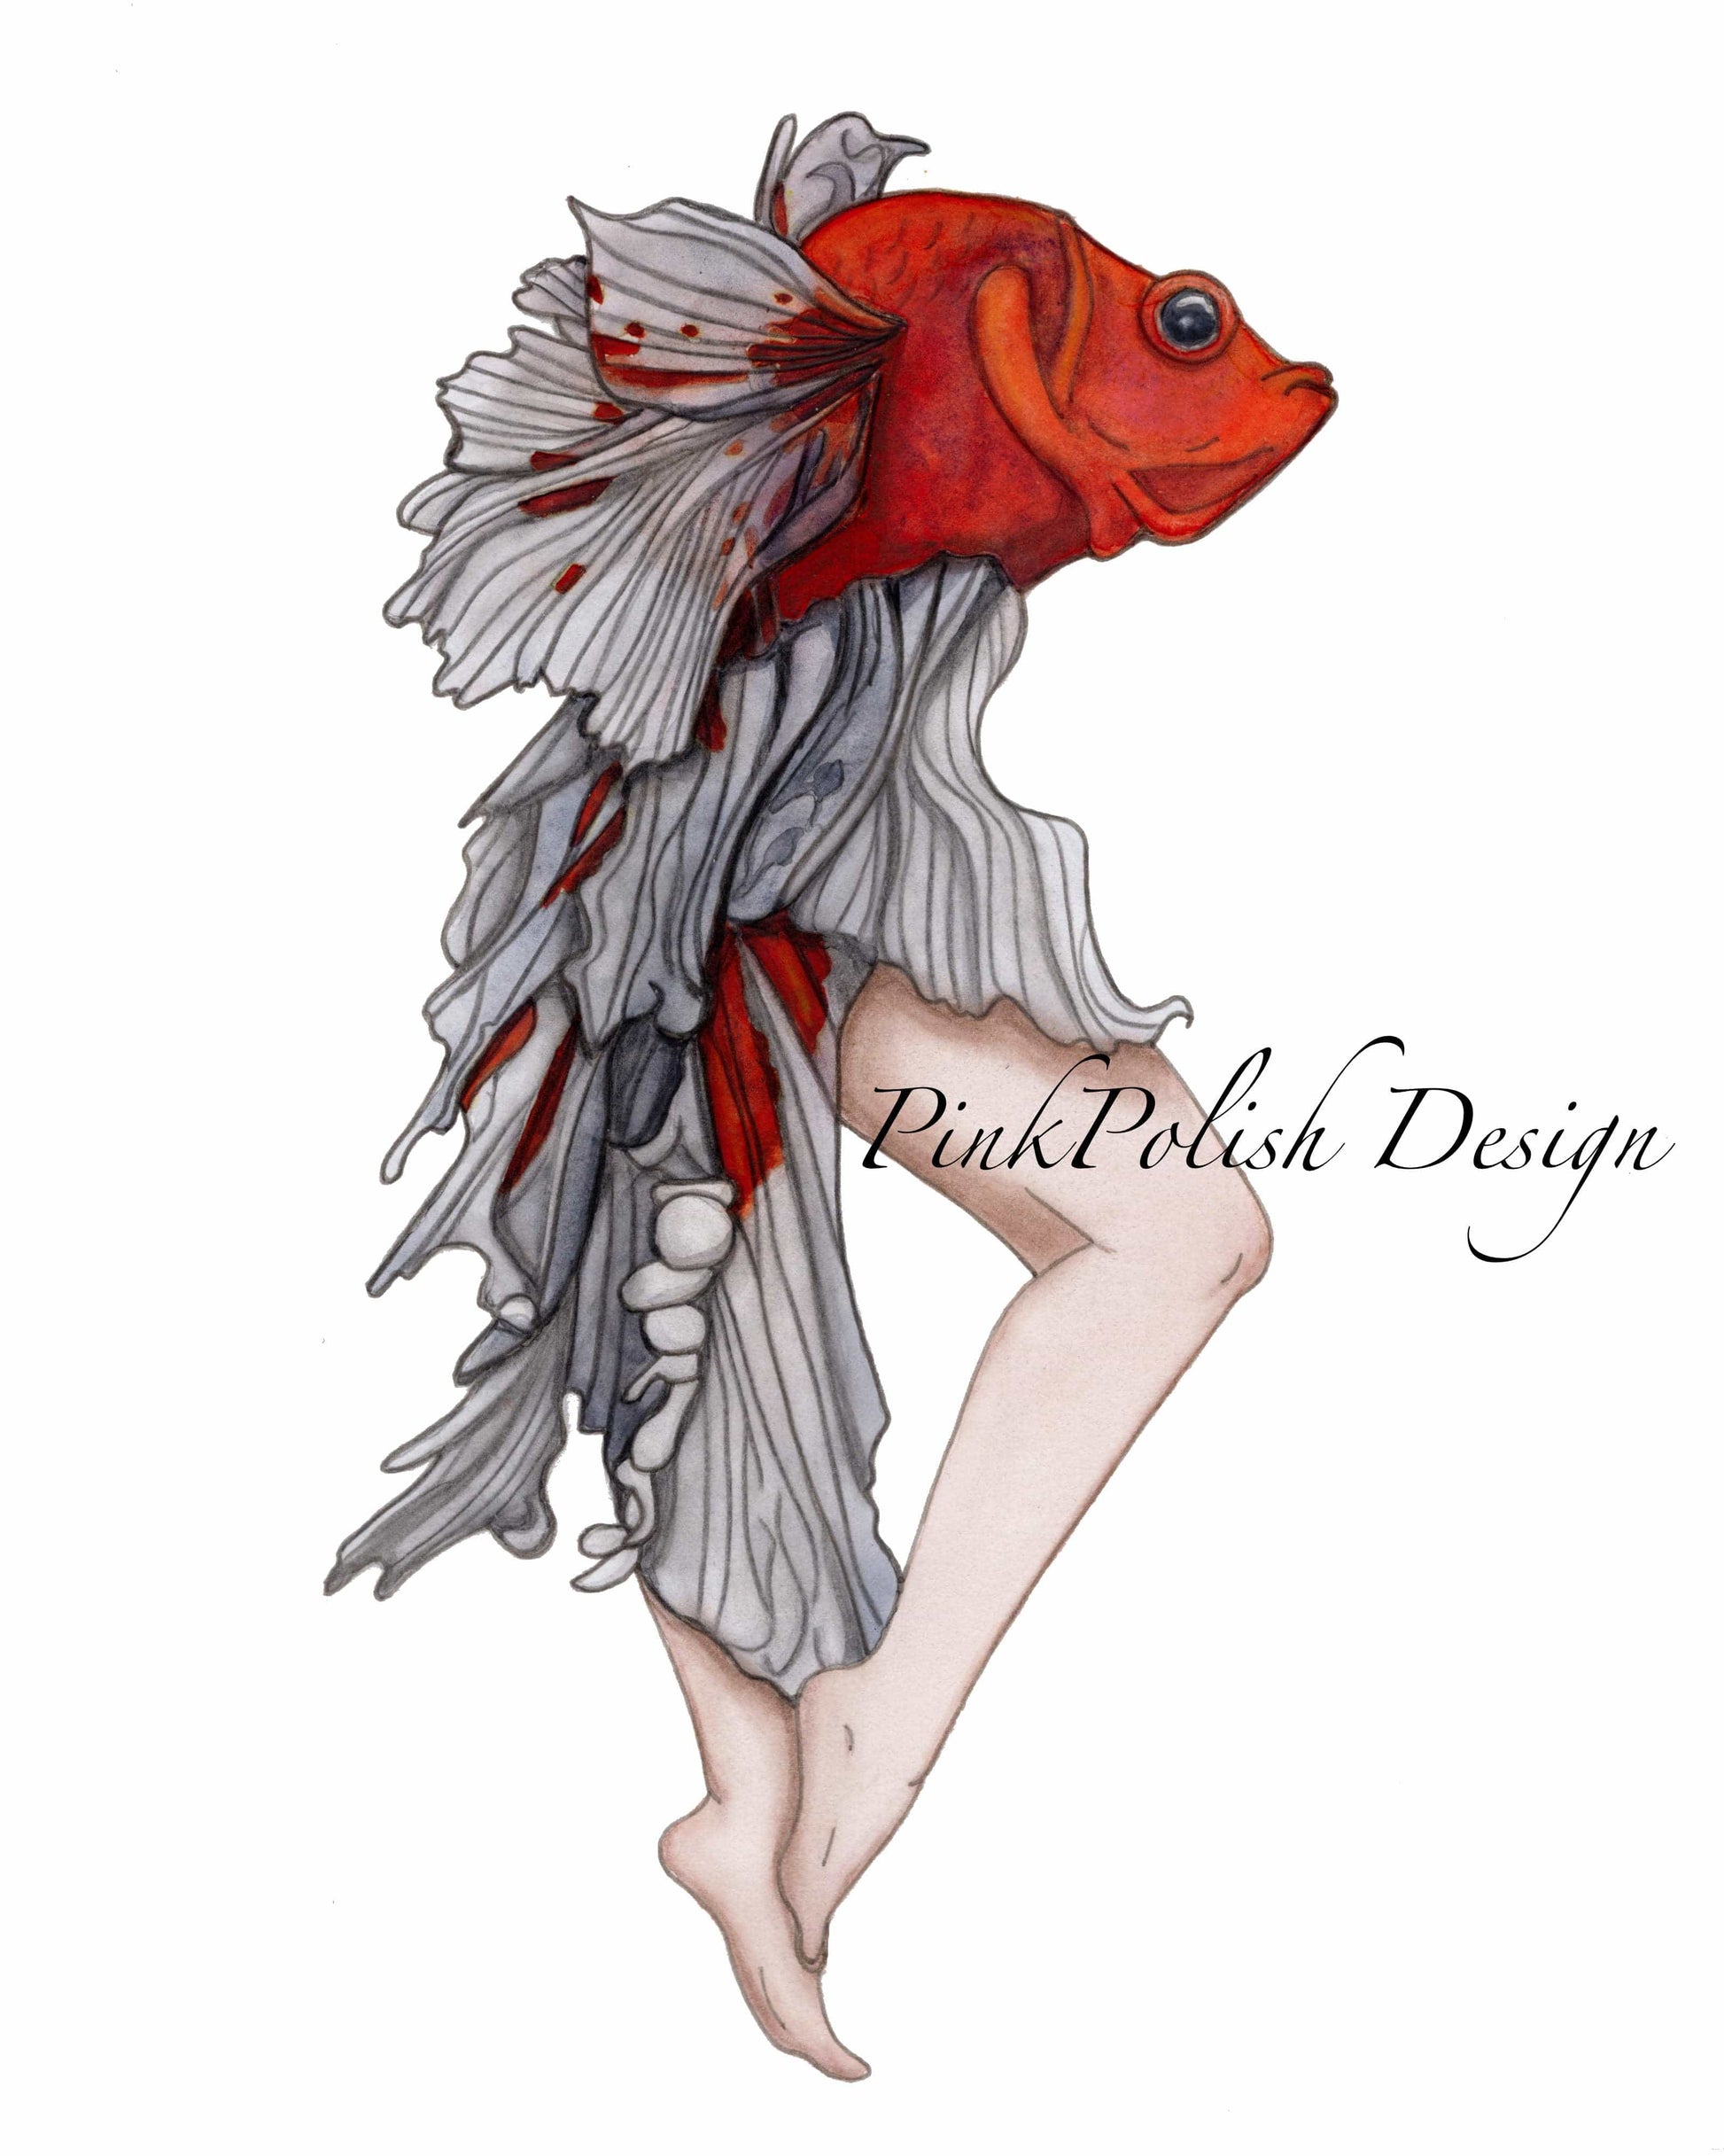 PinkPolish Design Art Prints "Strange Fish"  Watercolor Painting: Art Print